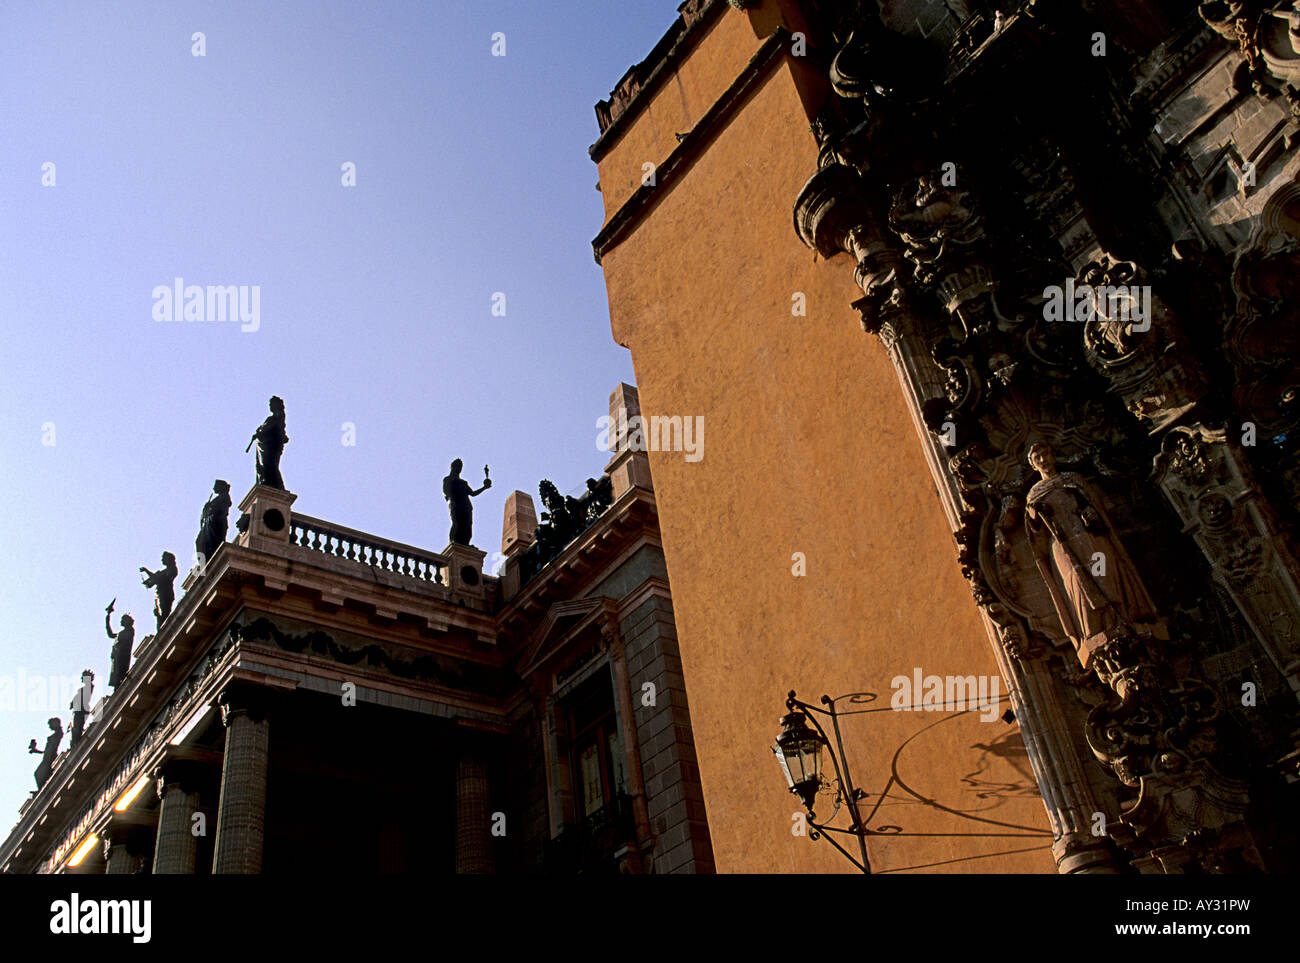 Exterior of the Templo de San Diego Teatro Juarez in the colonial mining town of Guanajuato Mexico Stock Photo